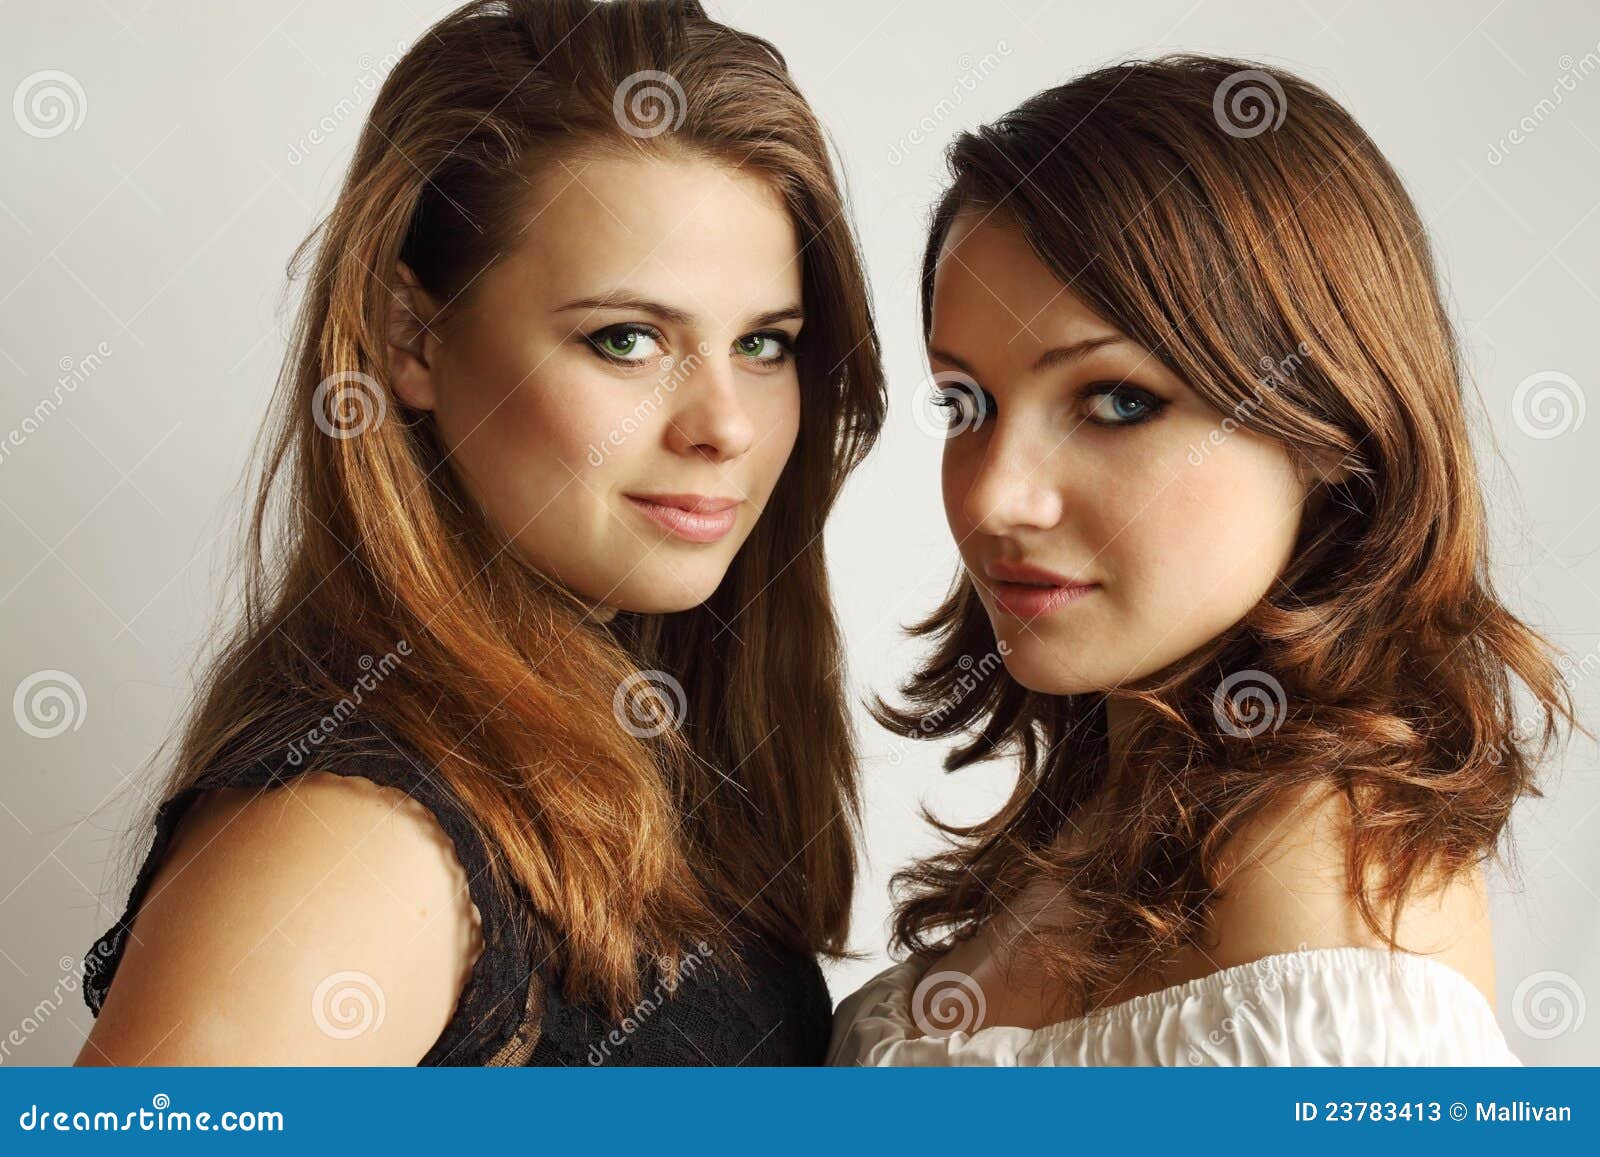 Two Lesbian Girls